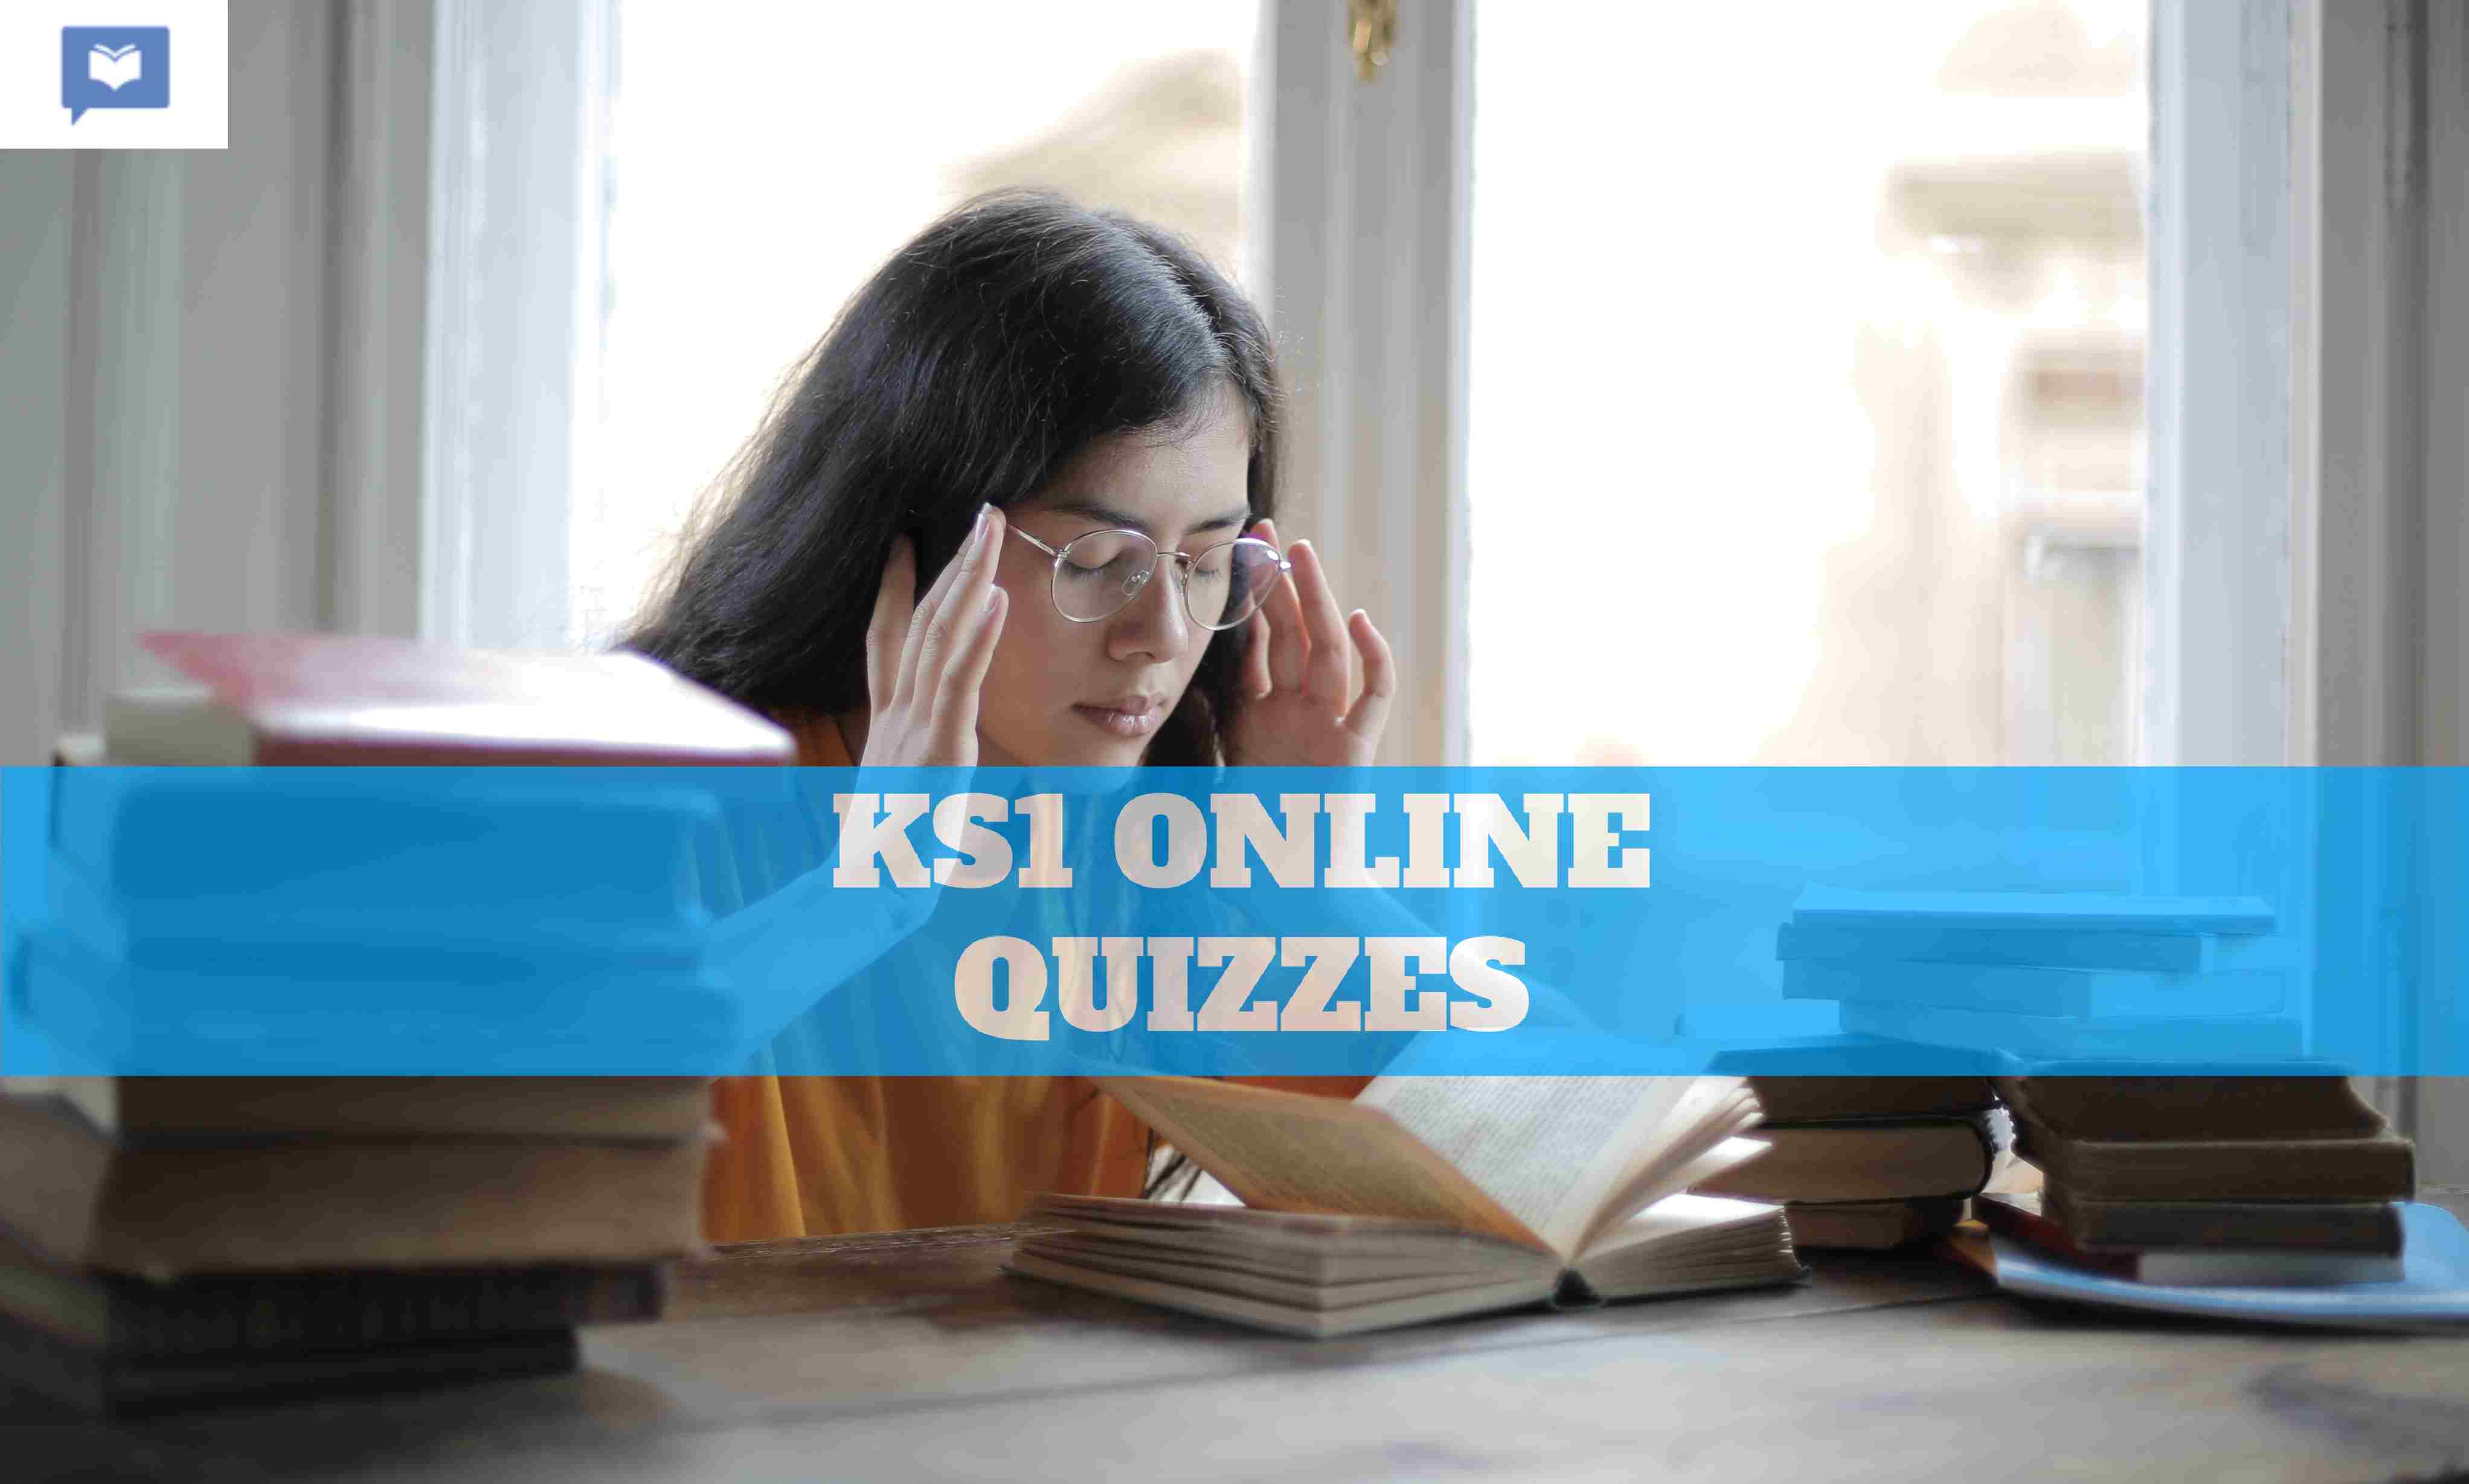 KS1 (key stage 1) Online Quizzes 